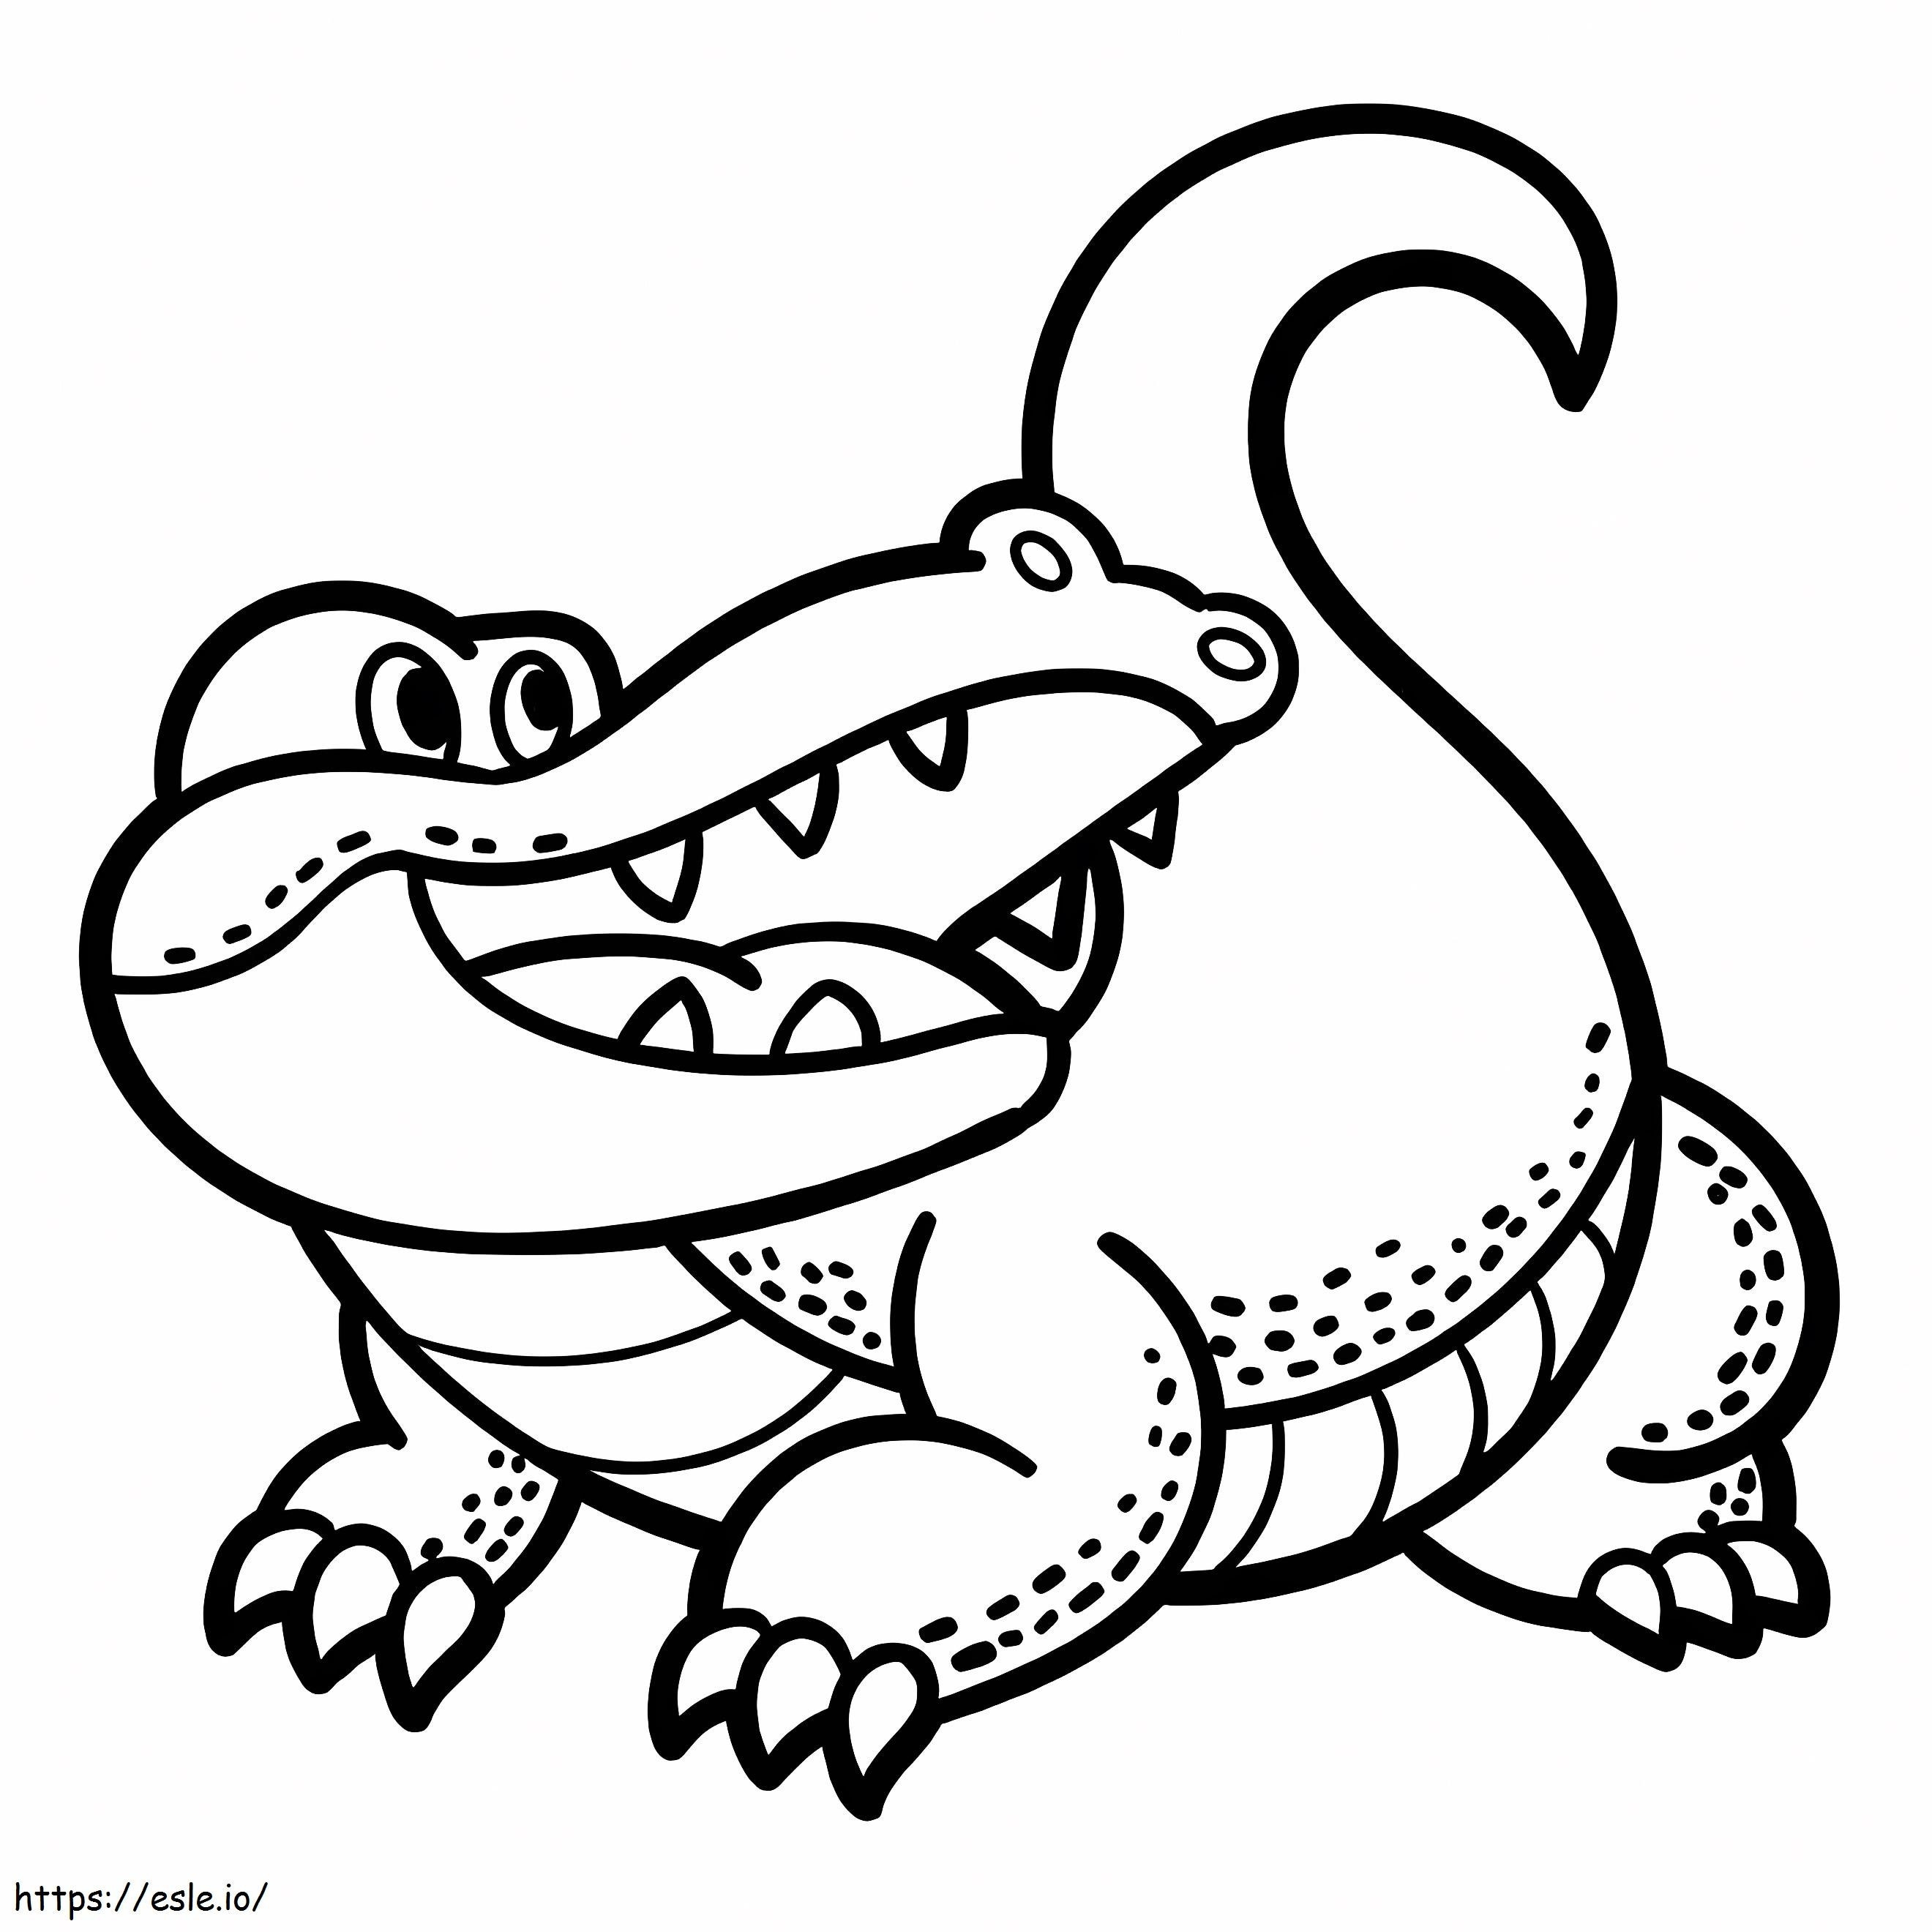 Free Crocodile Printable coloring page